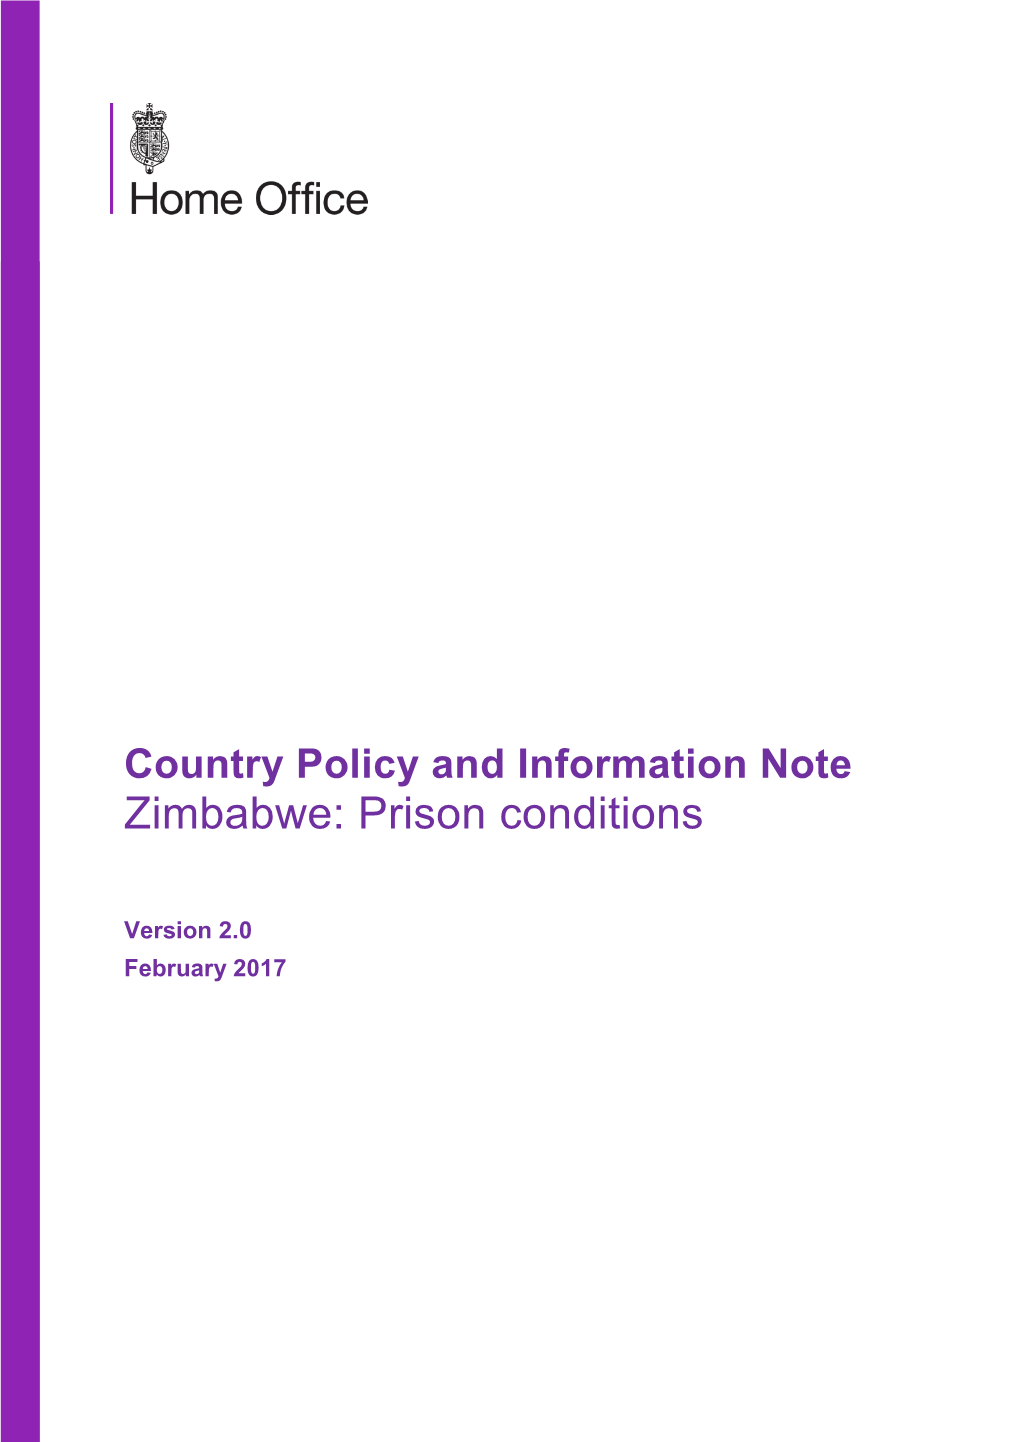 Zimbabwe: Prison Conditions